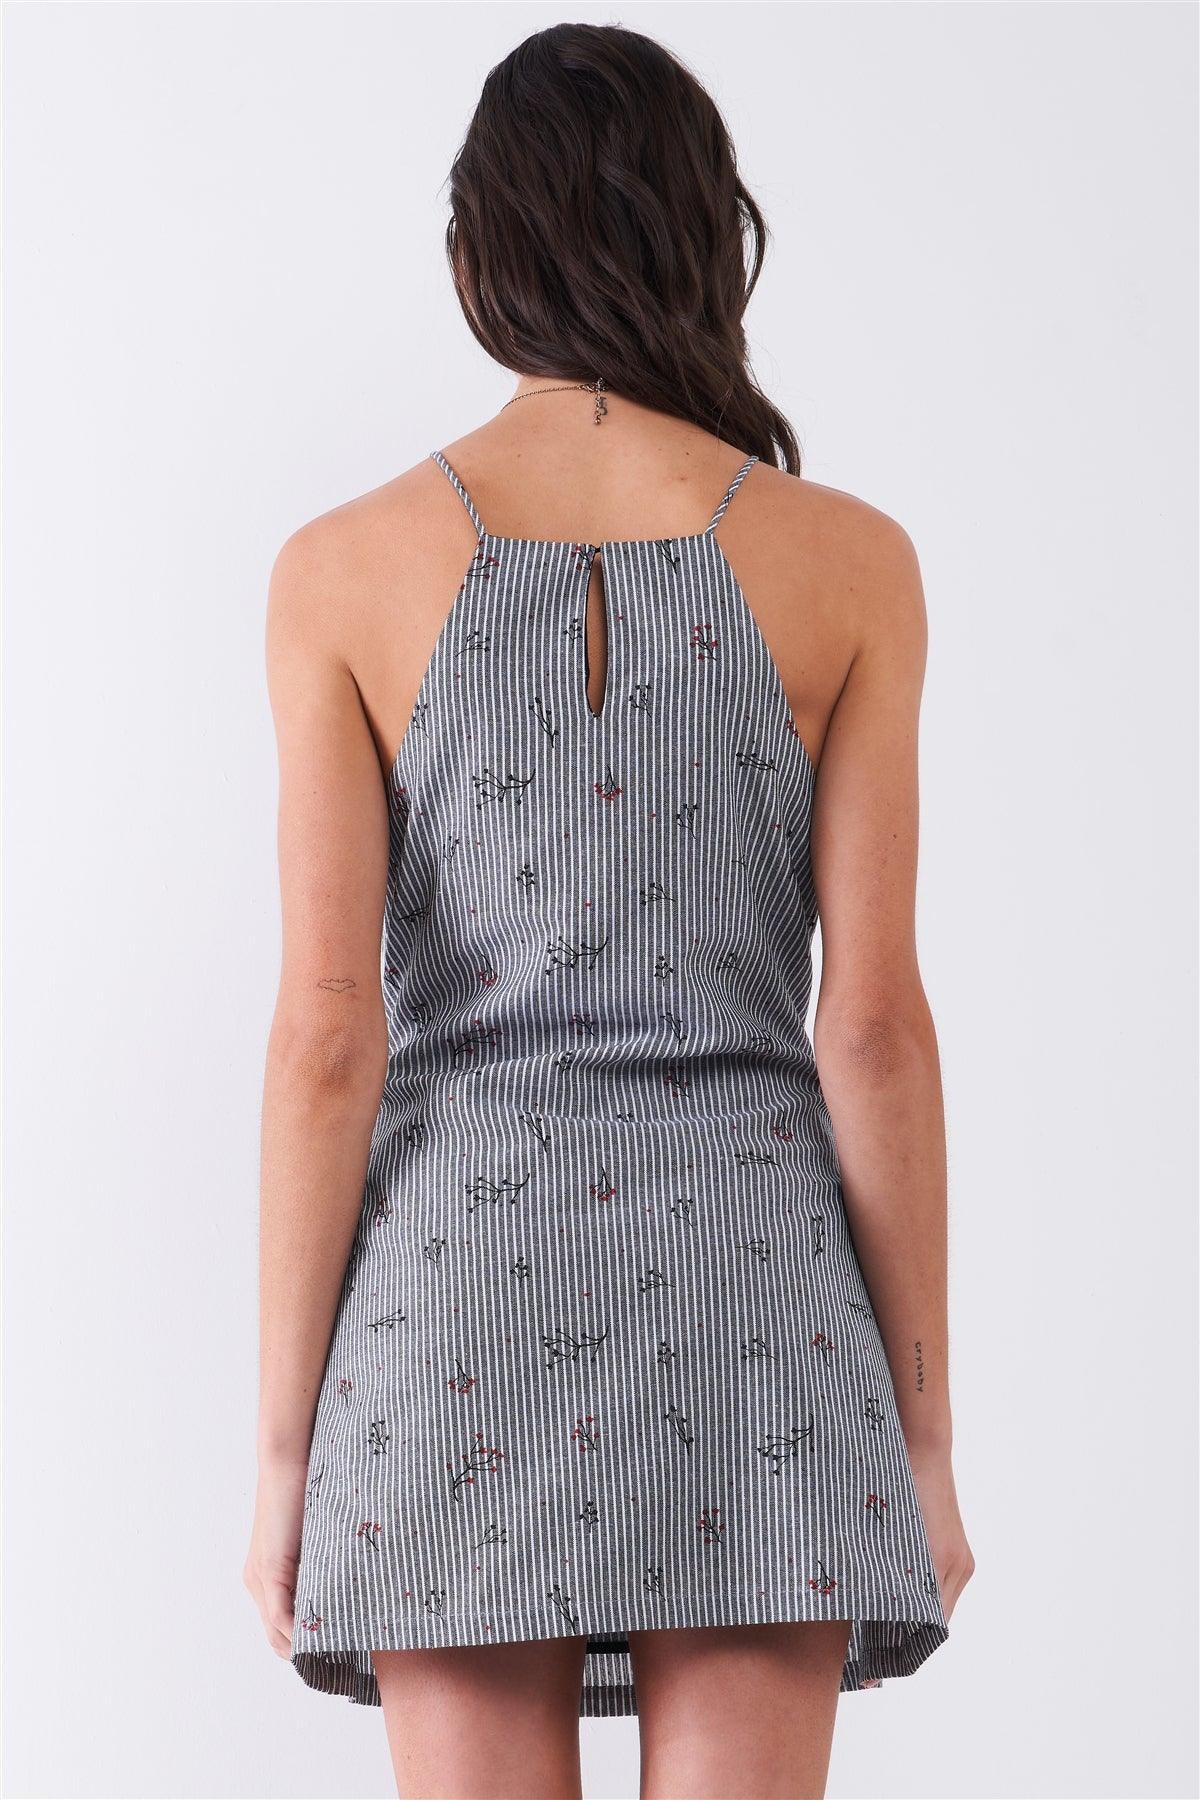 Grey Striped Sleeveless Floral Print High Neck Self-Tie Waist Mini Dress /1-2-2-1